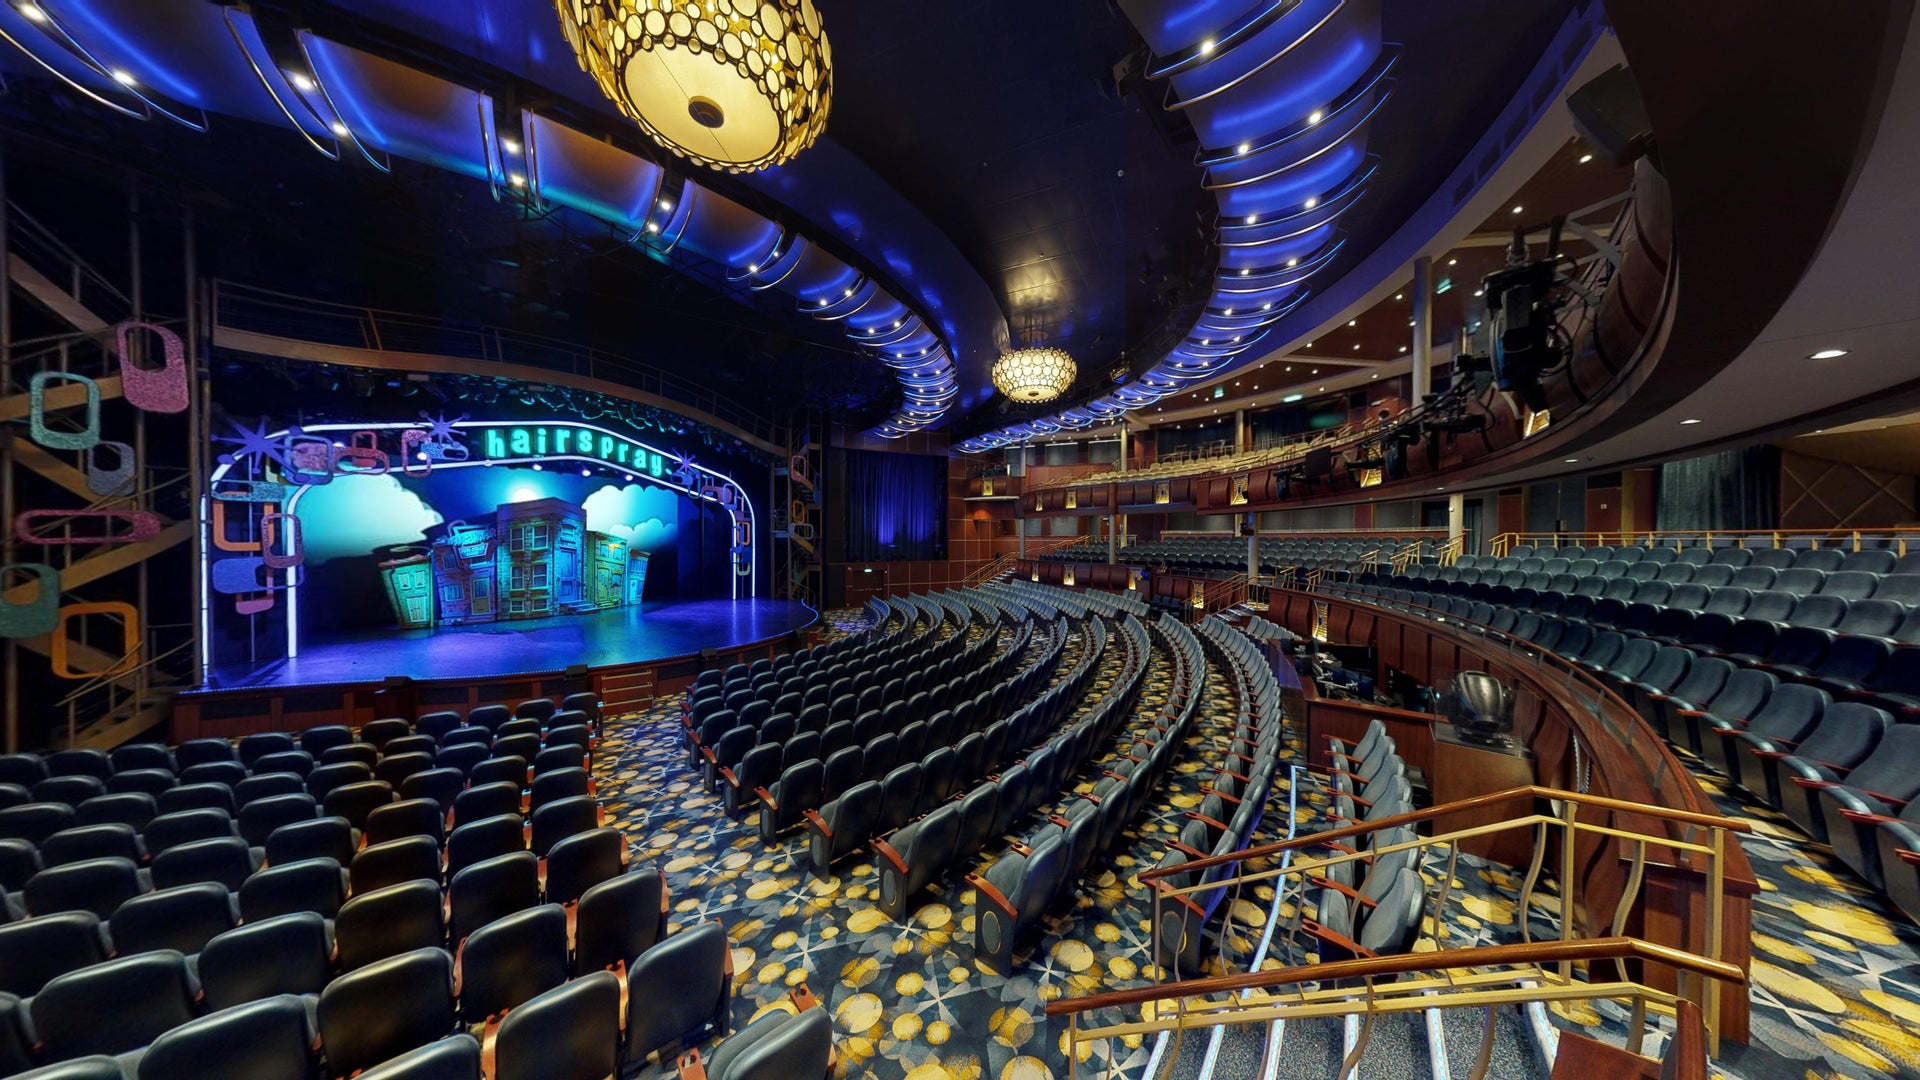 Symphony of the Seas Royal Theater Virtual Tour